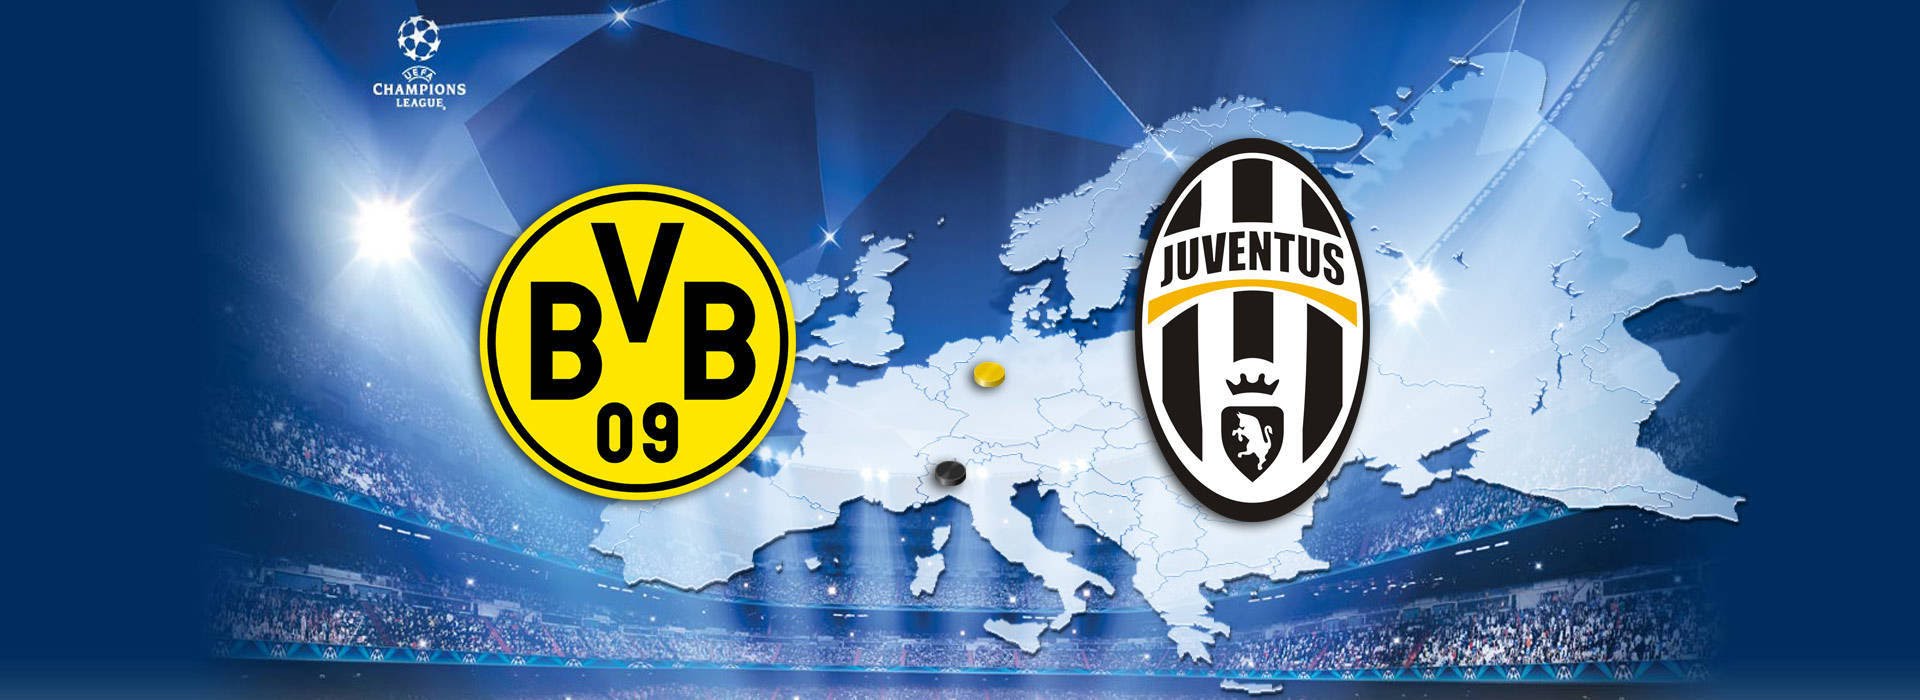 Meccs előzetes: Borussia Dortmund - Juventus